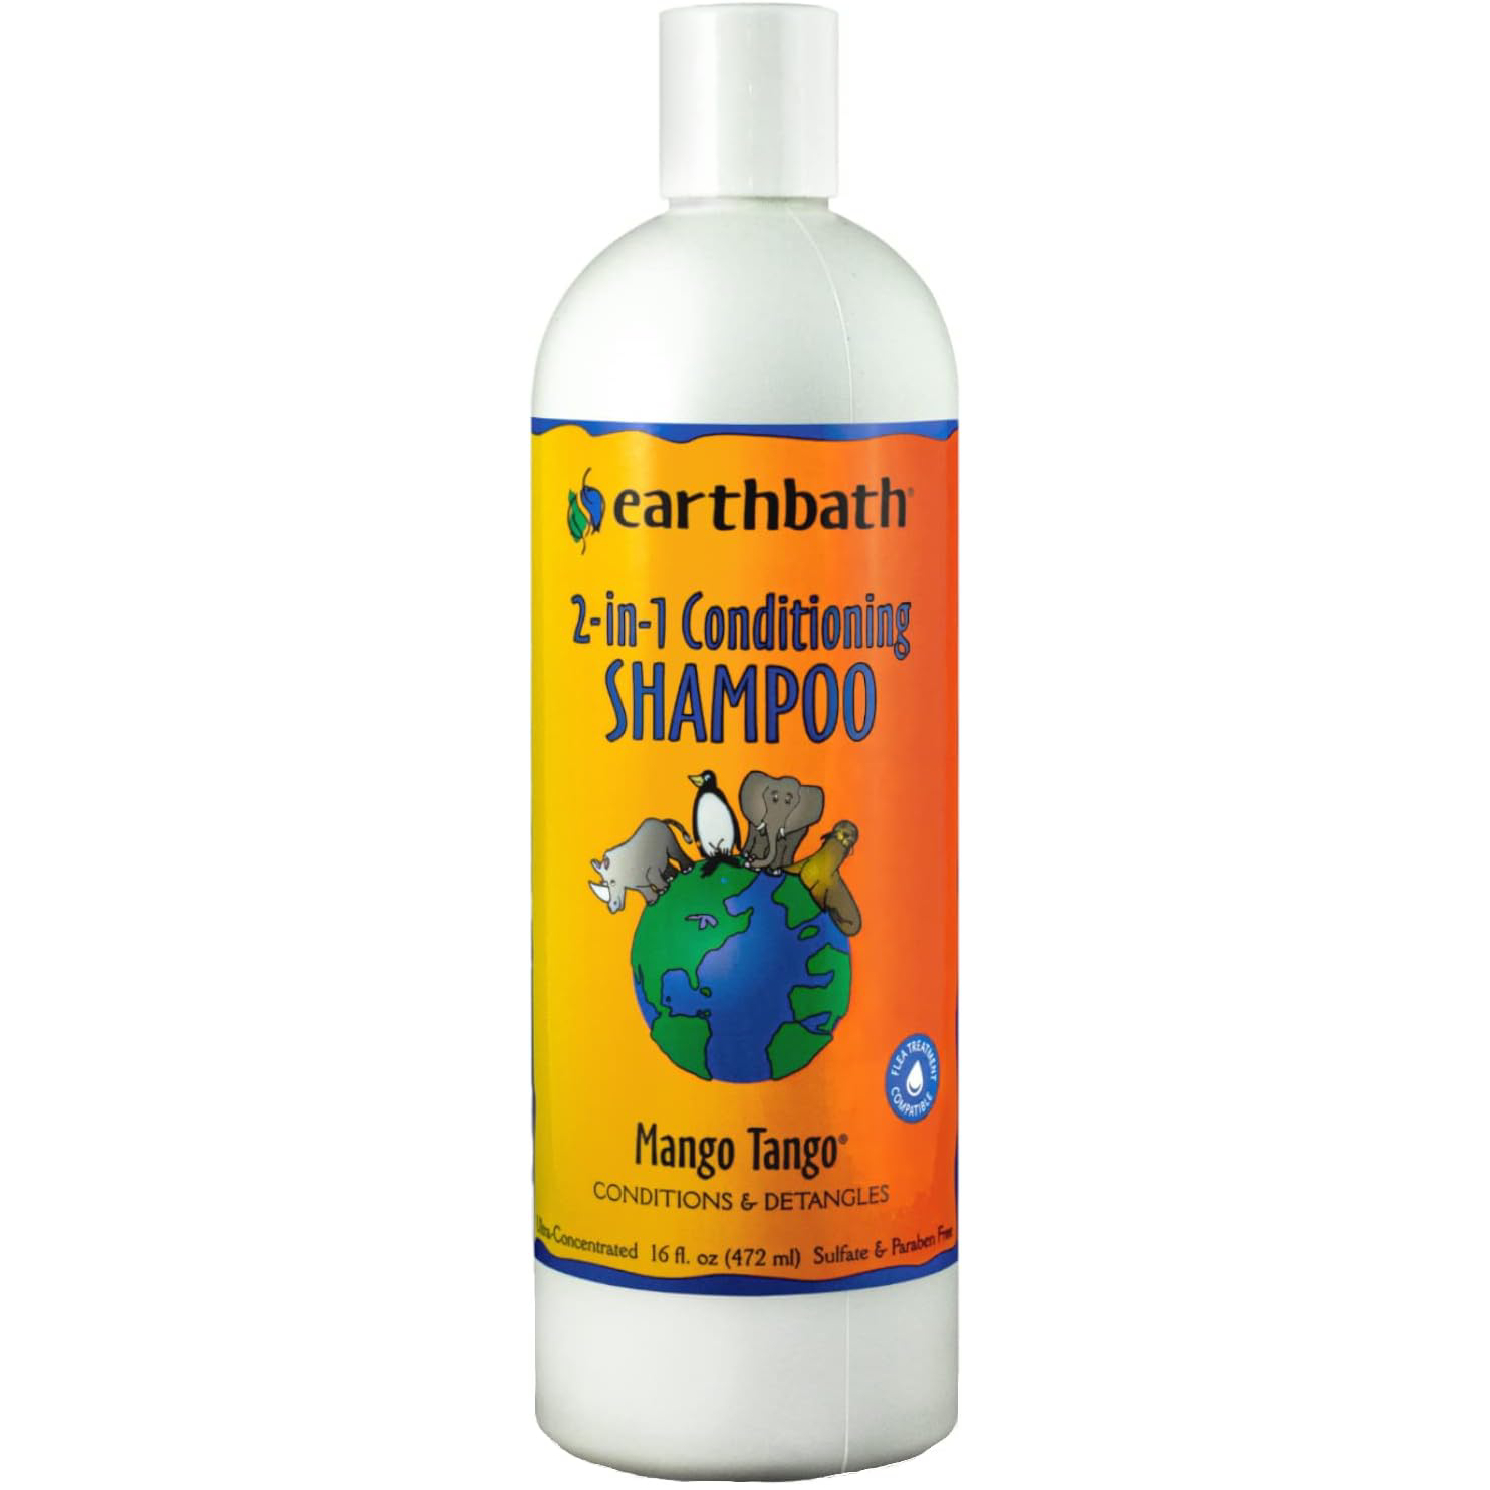 earthbath, Mango Tango 2-in-1 Conditioning Shampoo 